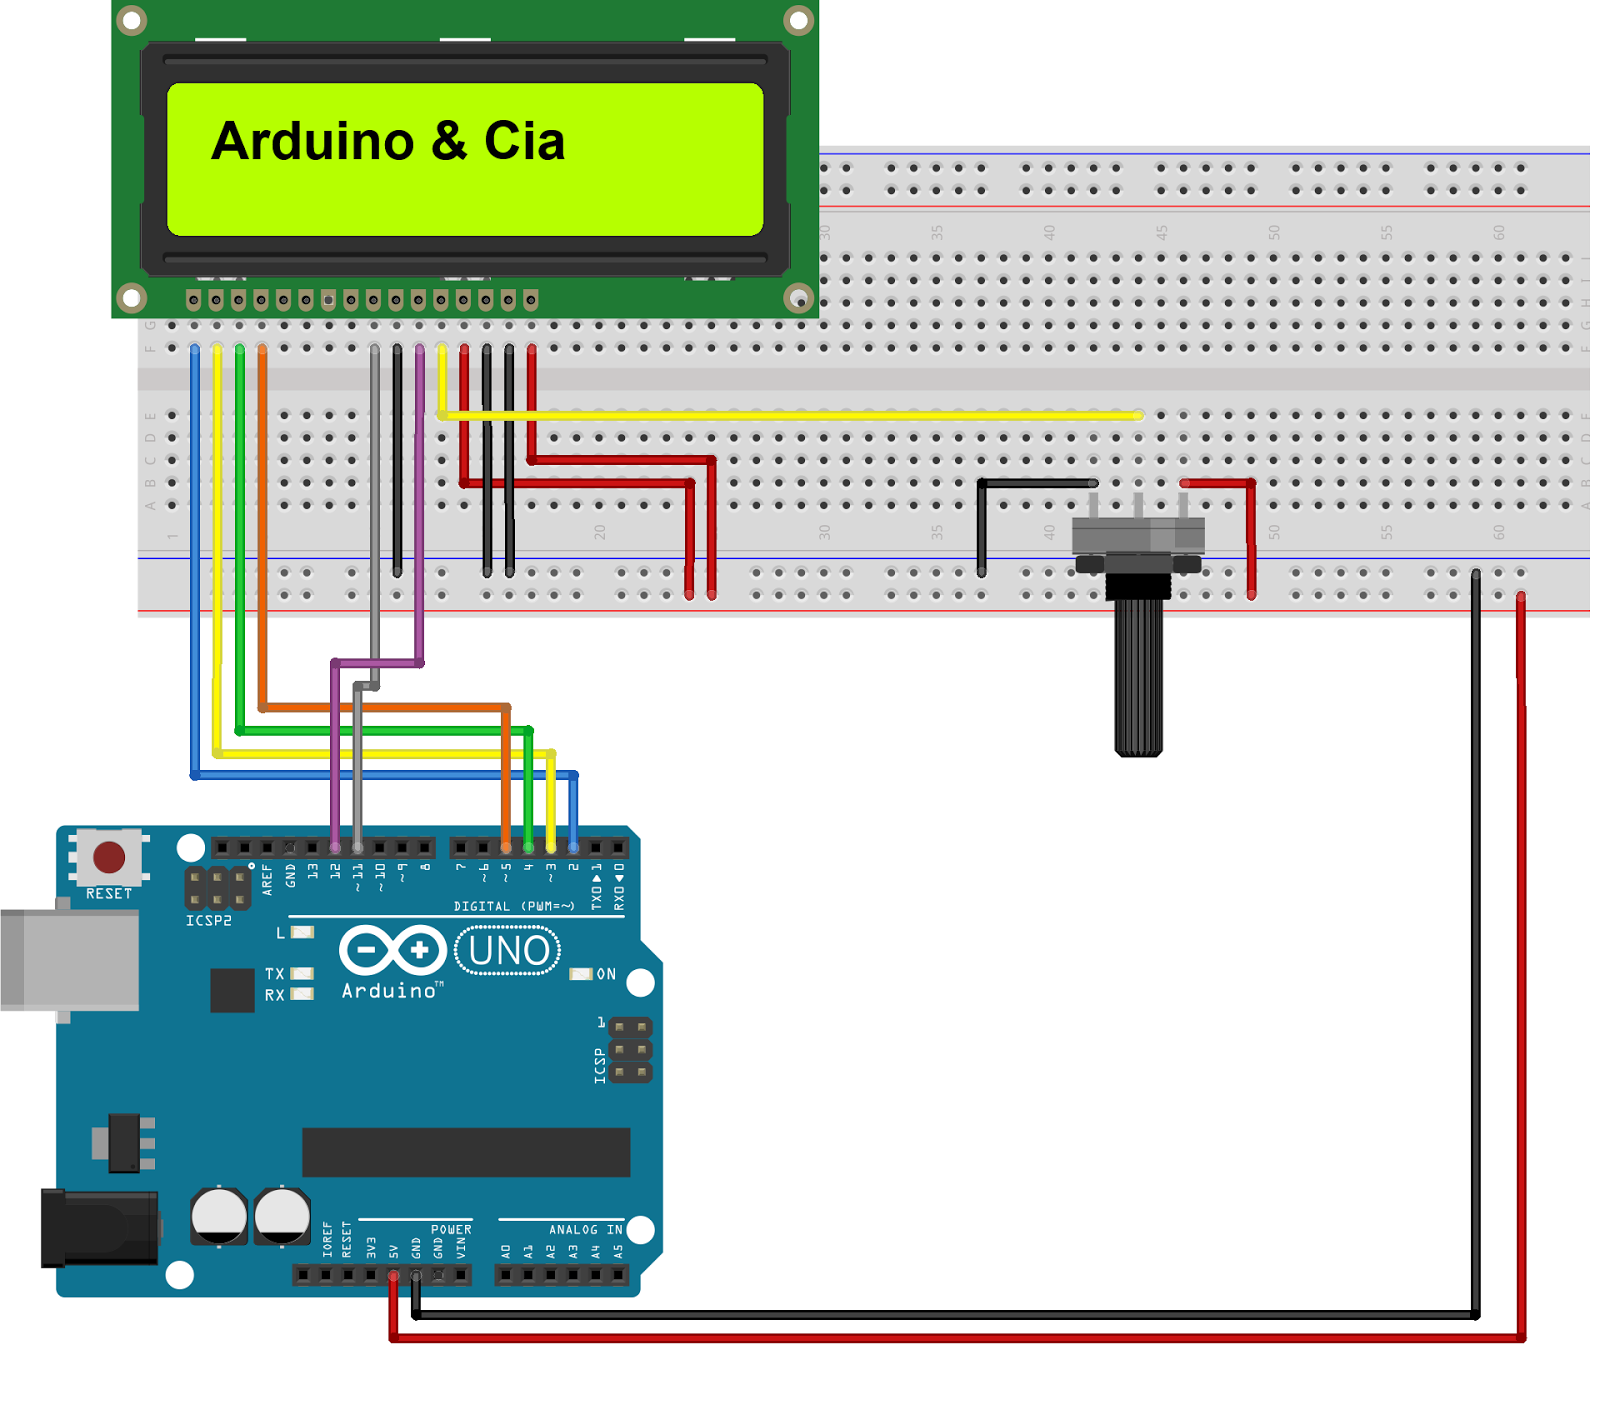 Lcd 16x2 Display Interfacing With Arduino Uno Circuit Diagram Arduino